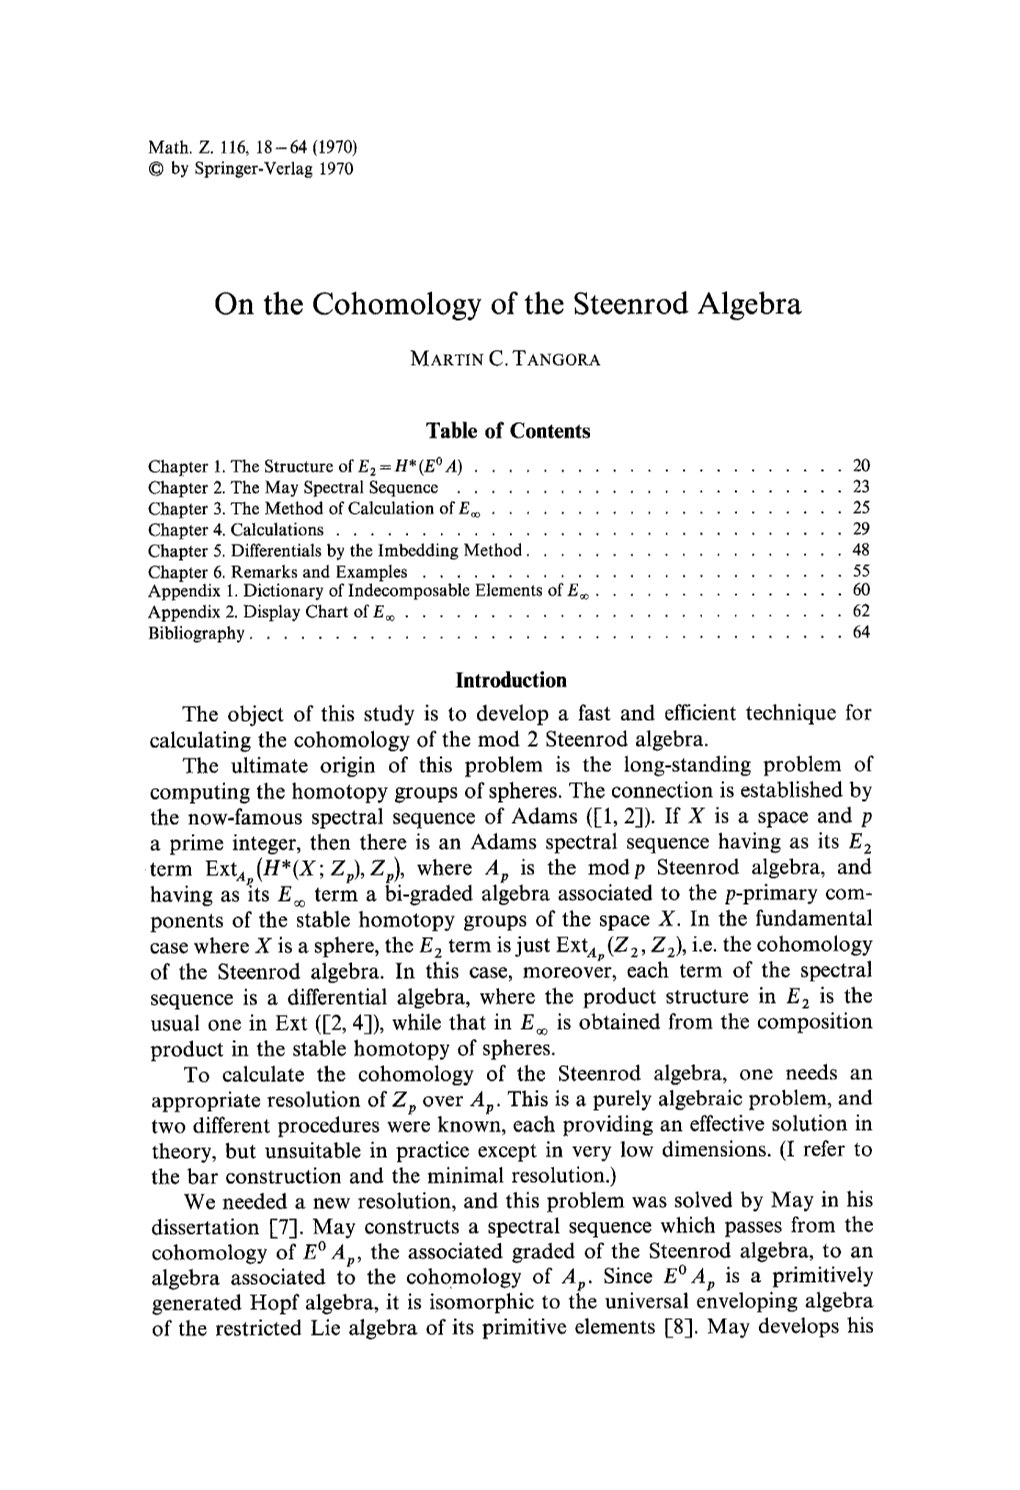 On the Cohomology of the Steenrod Algebra